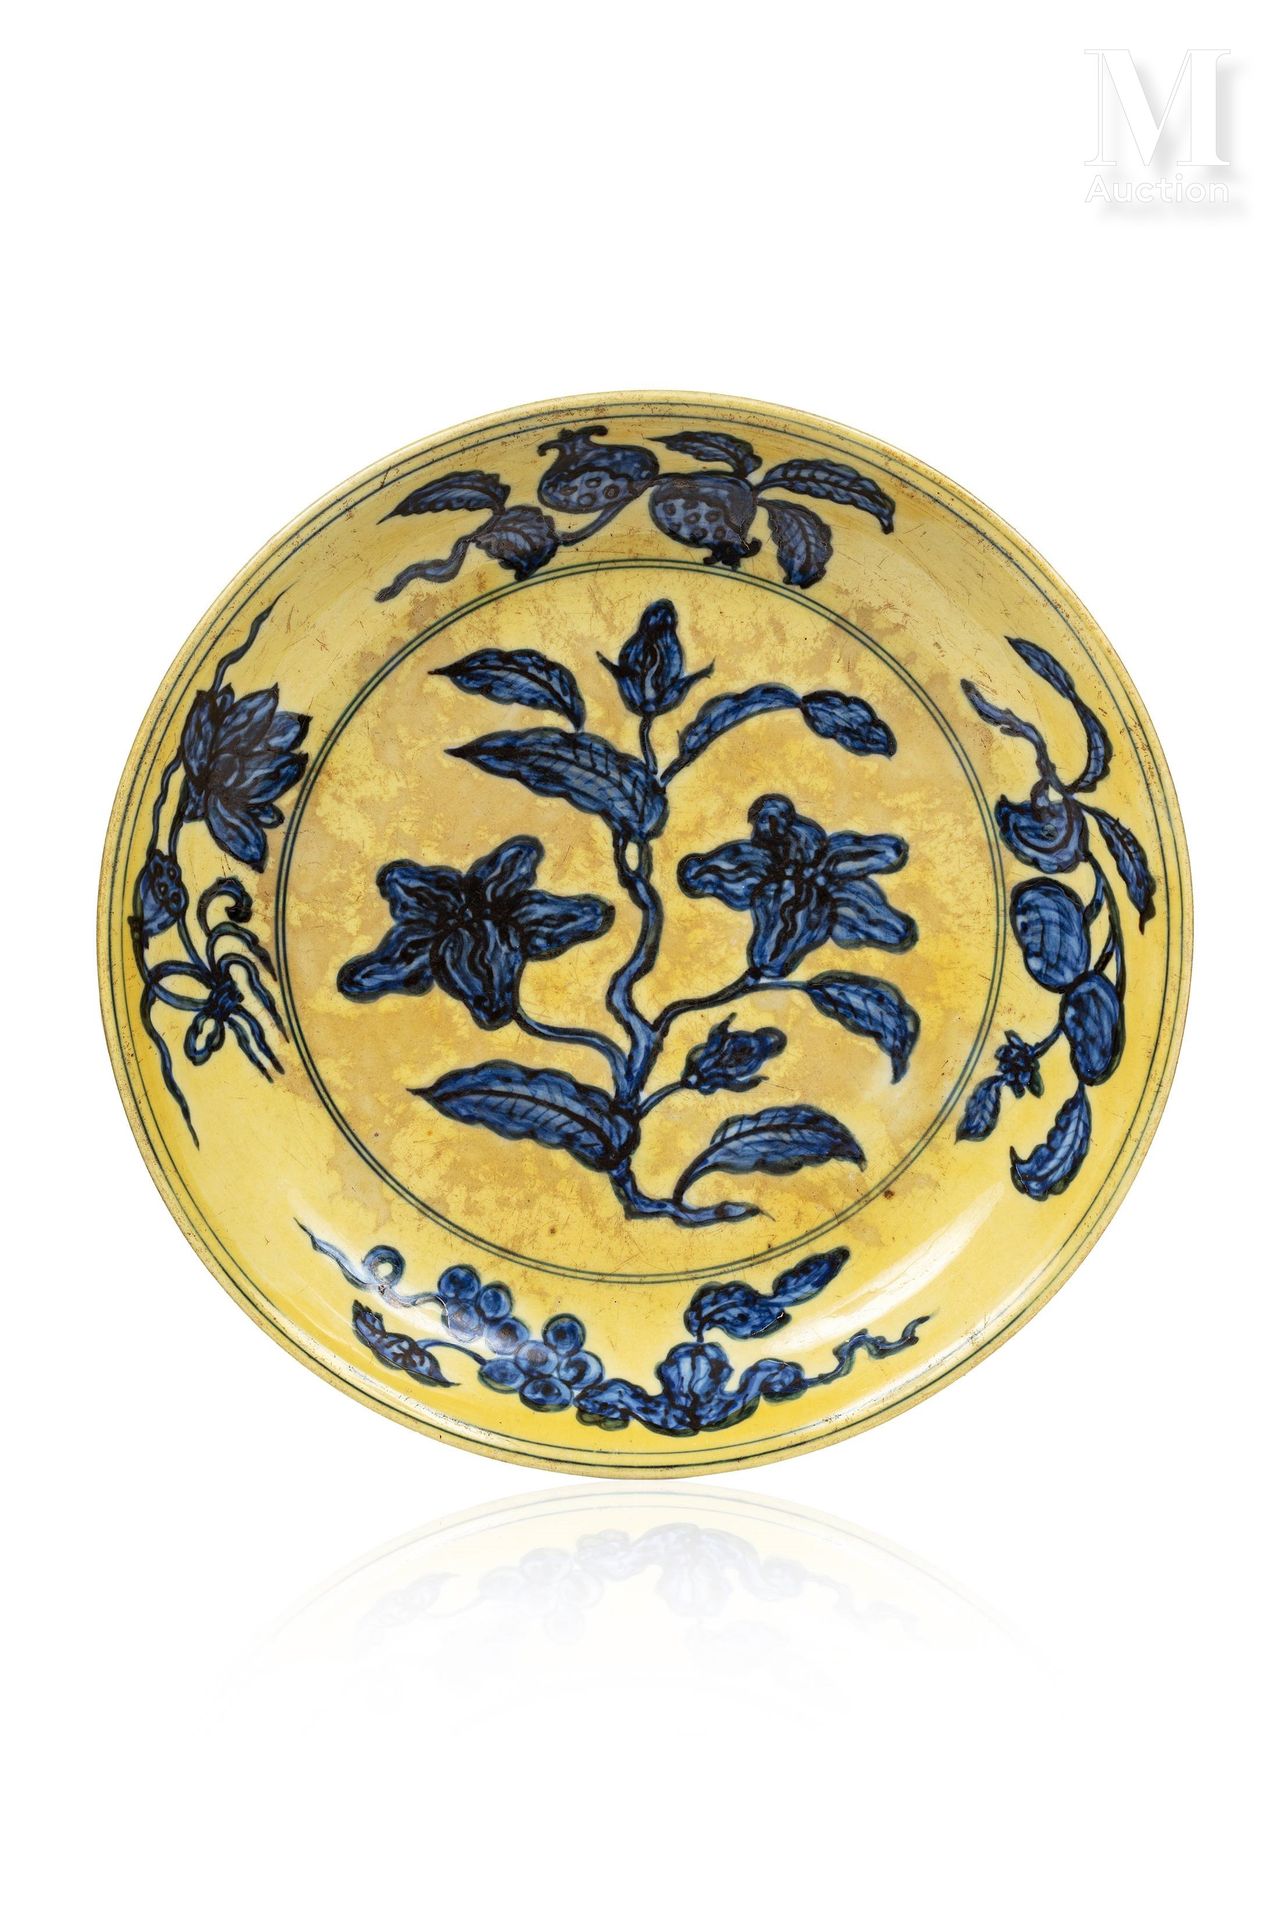 CHINE, marque et époque Jiajing 
栀子花的盘子

这个盘子有圆形的边和略微外翻的唇，在单色的黄色背景上用钴蓝色的釉下彩进行装饰。&hellip;